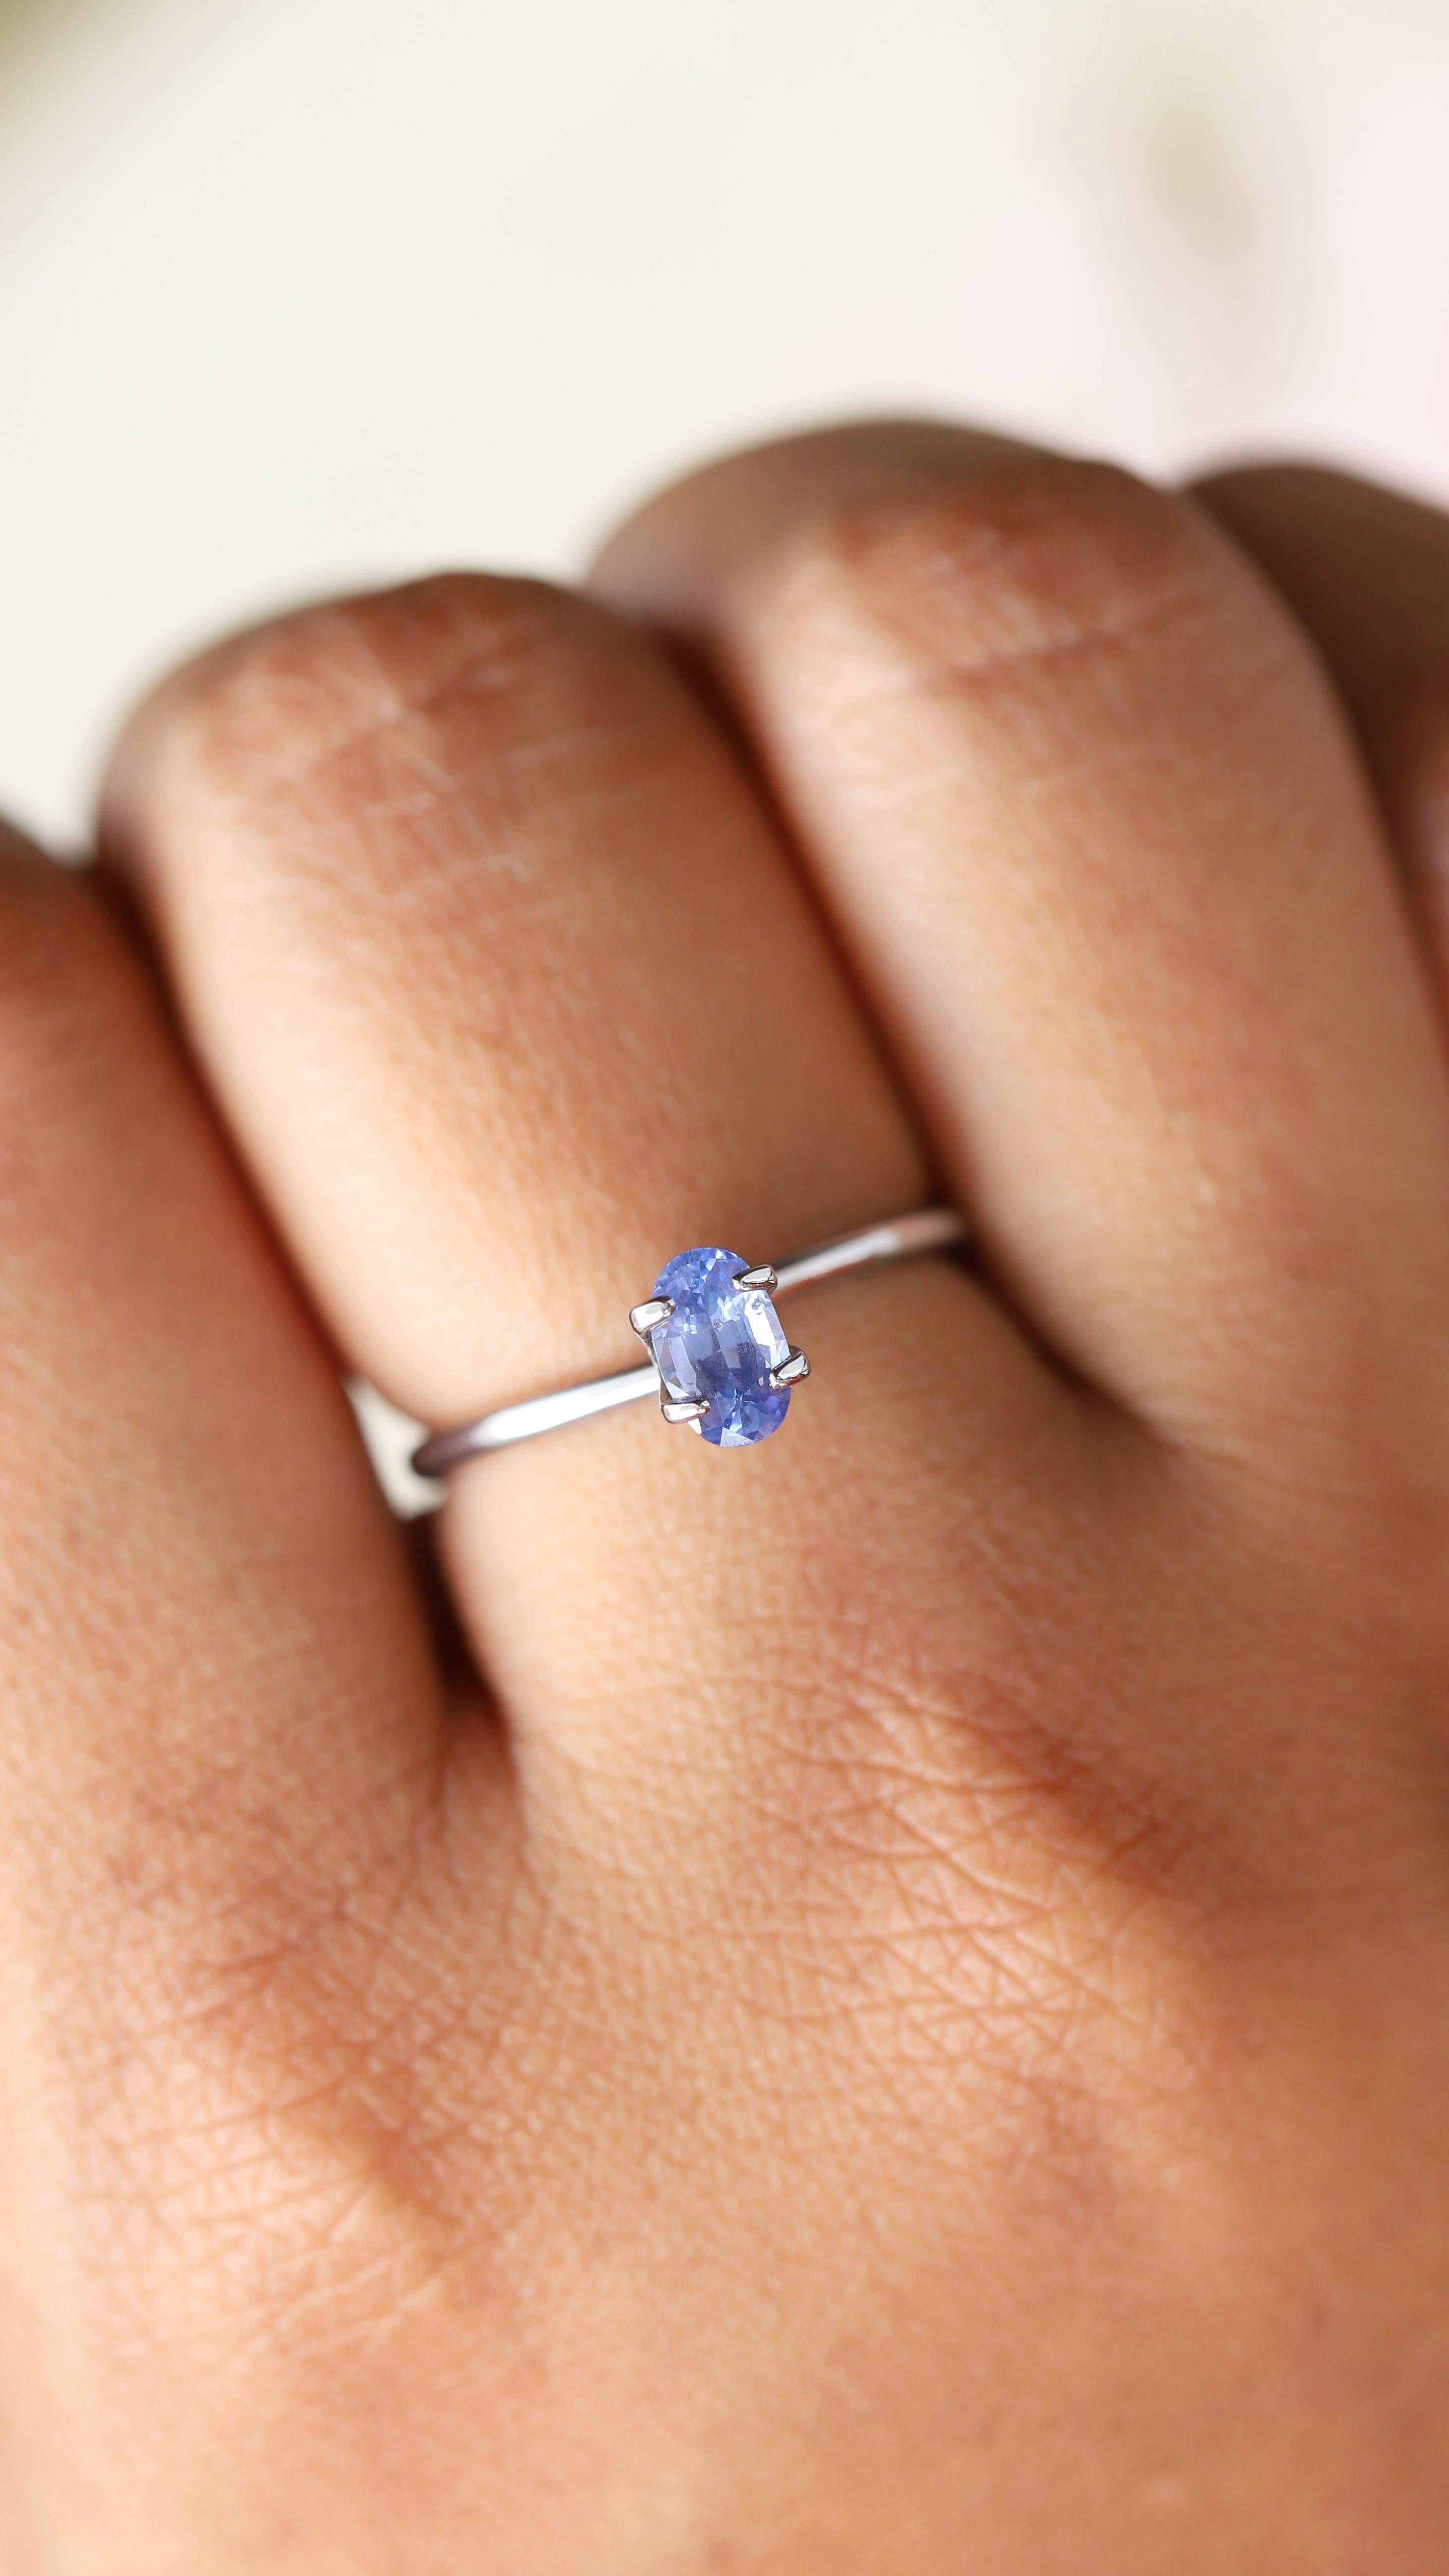 Women's 0.73 Carat Petite Natural Unheated Blue Sapphire Loose Gemstone from Sri Lanka